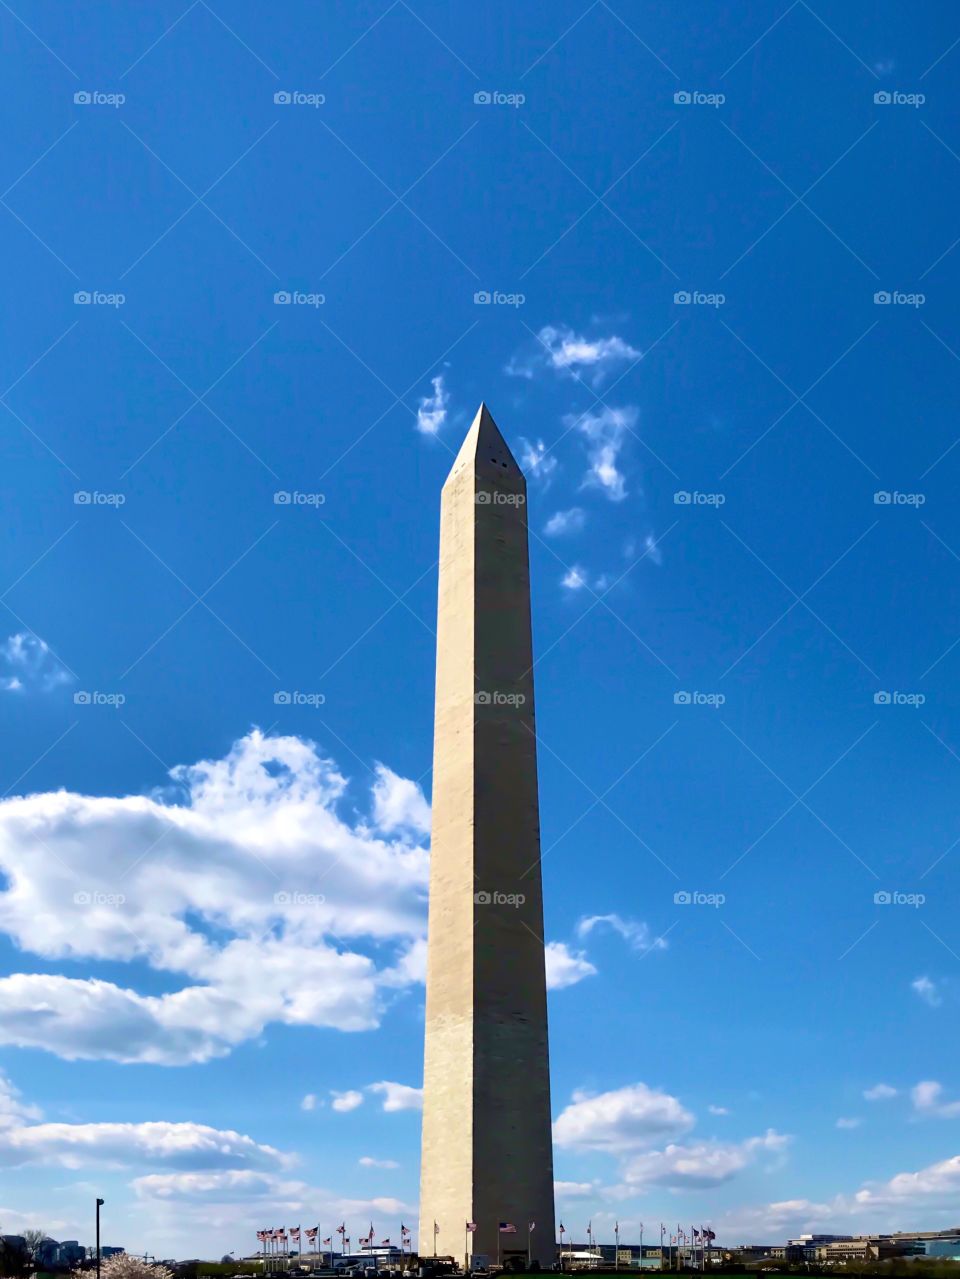 The majestic Washington Monument on the National Mall in Washington DC.